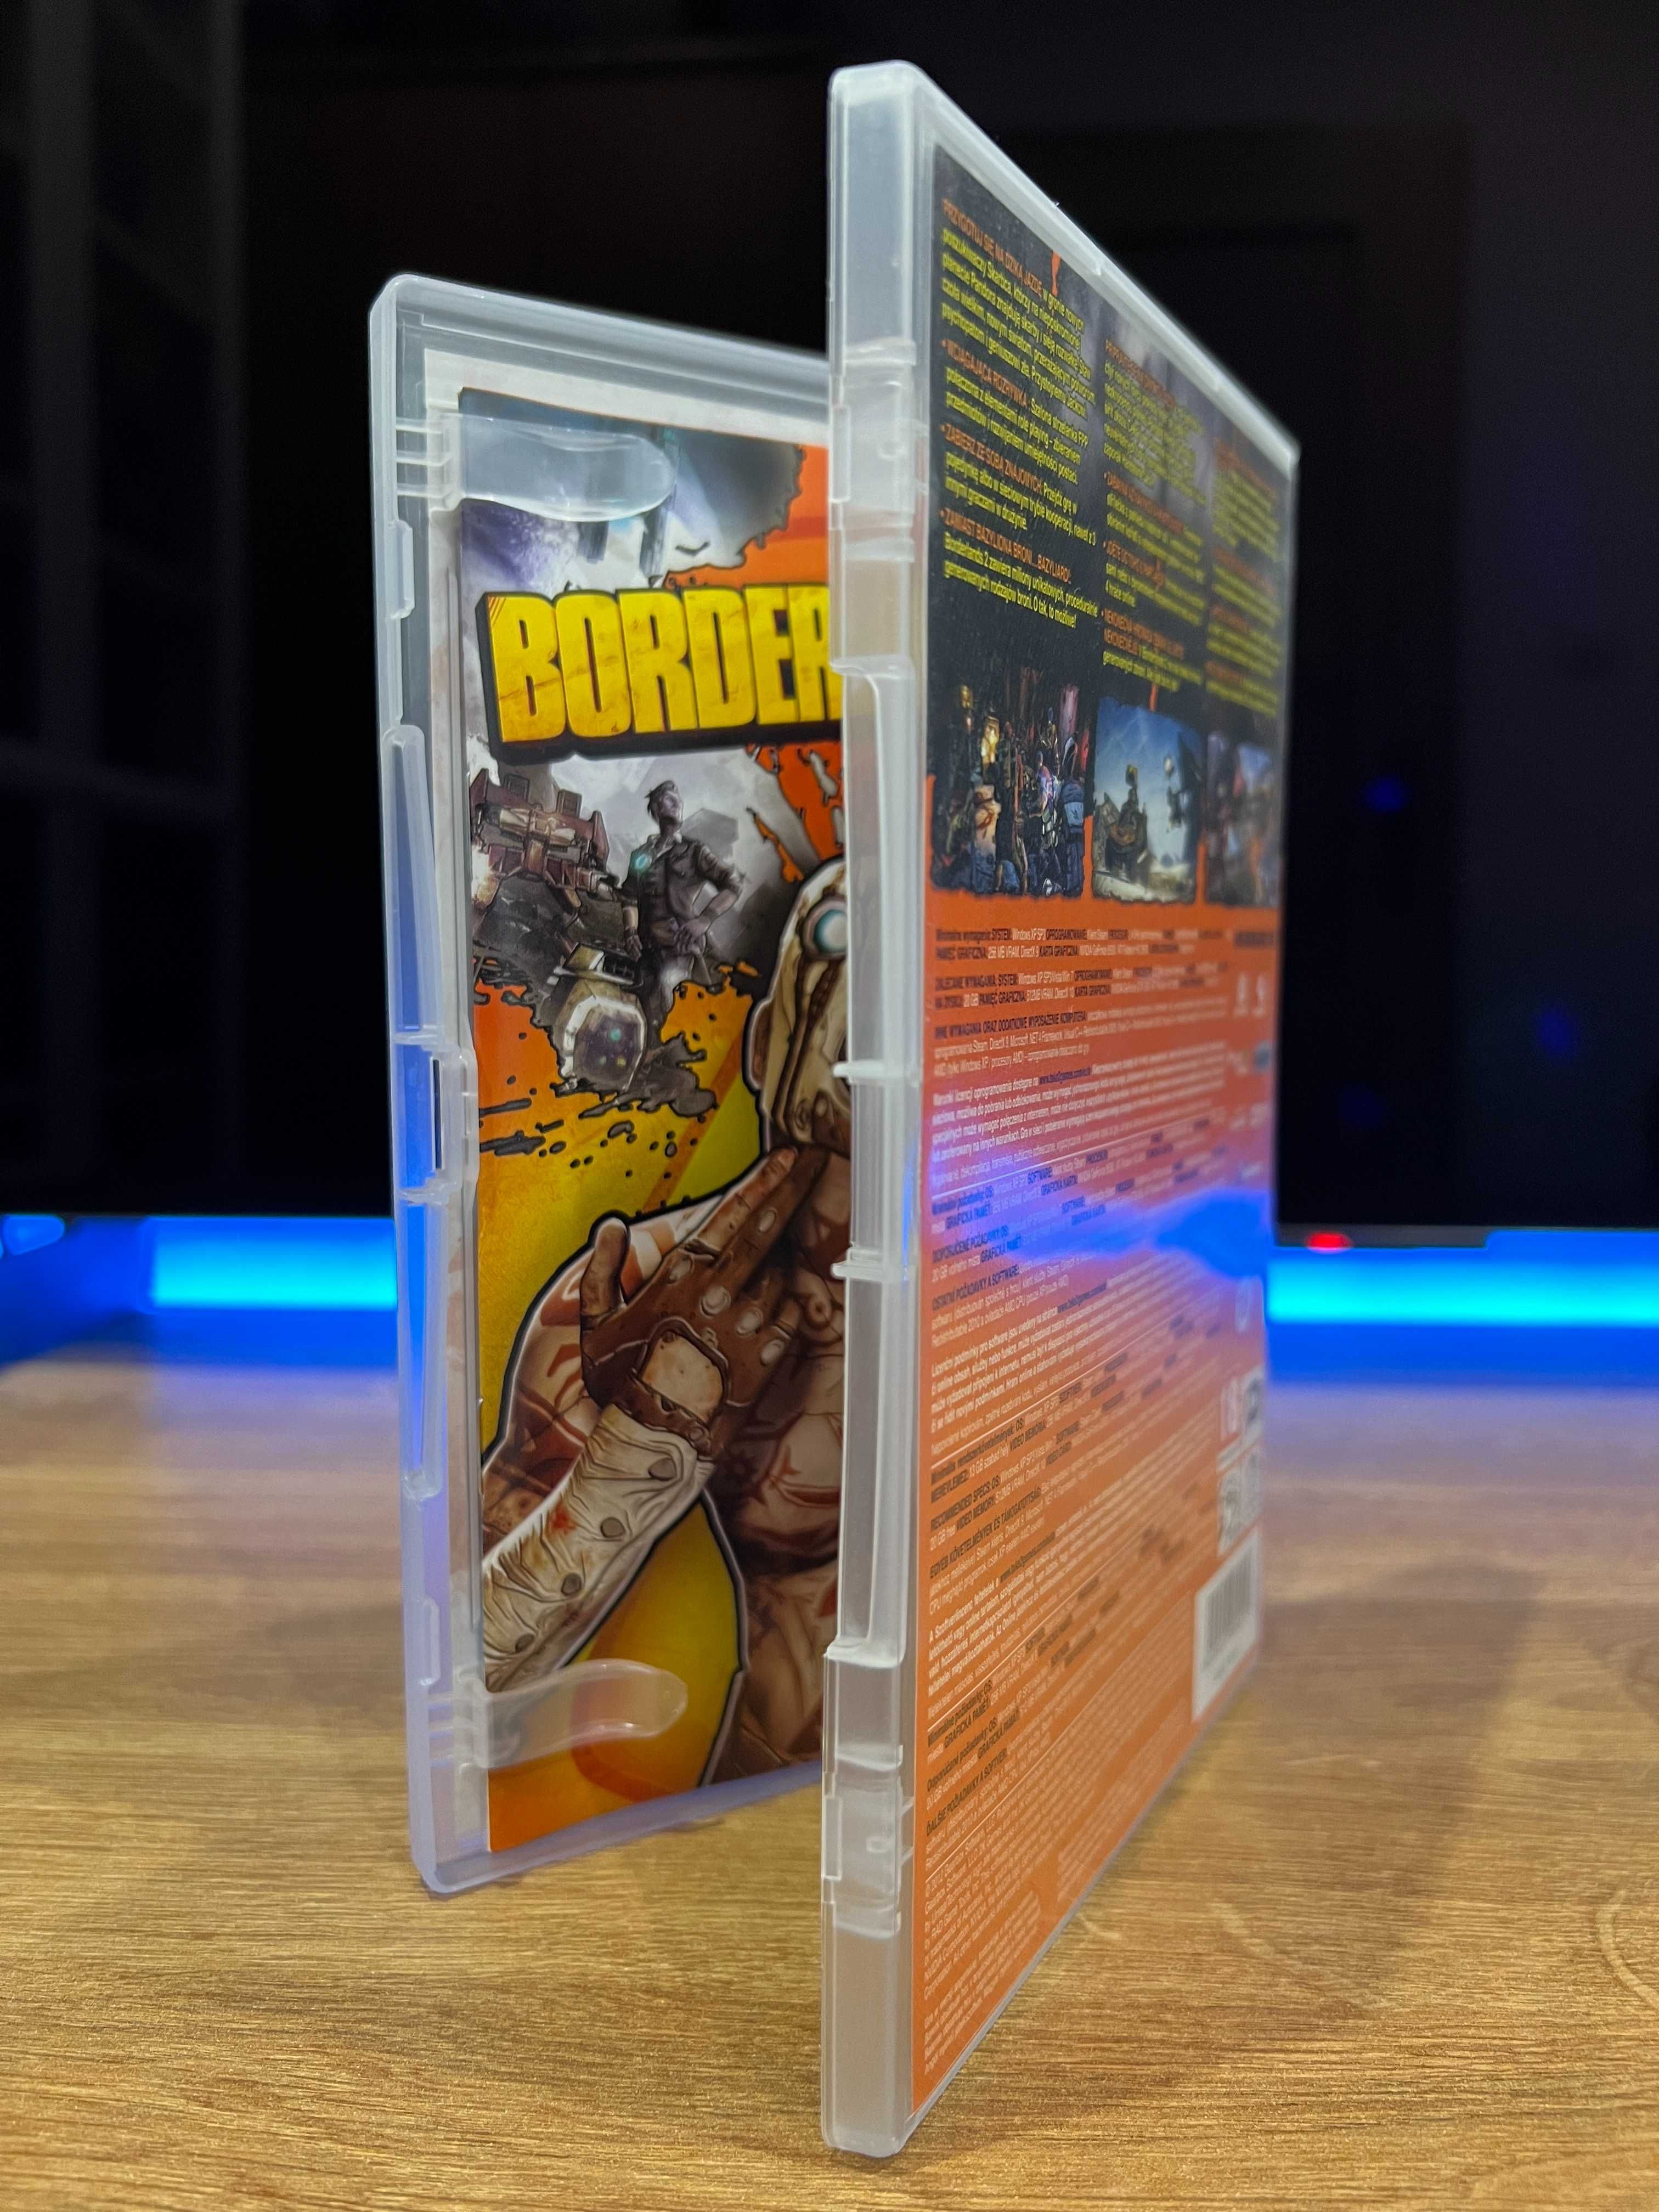 Borderlands 2 (PC PL 2012) DVD BOX premierowe wydanie